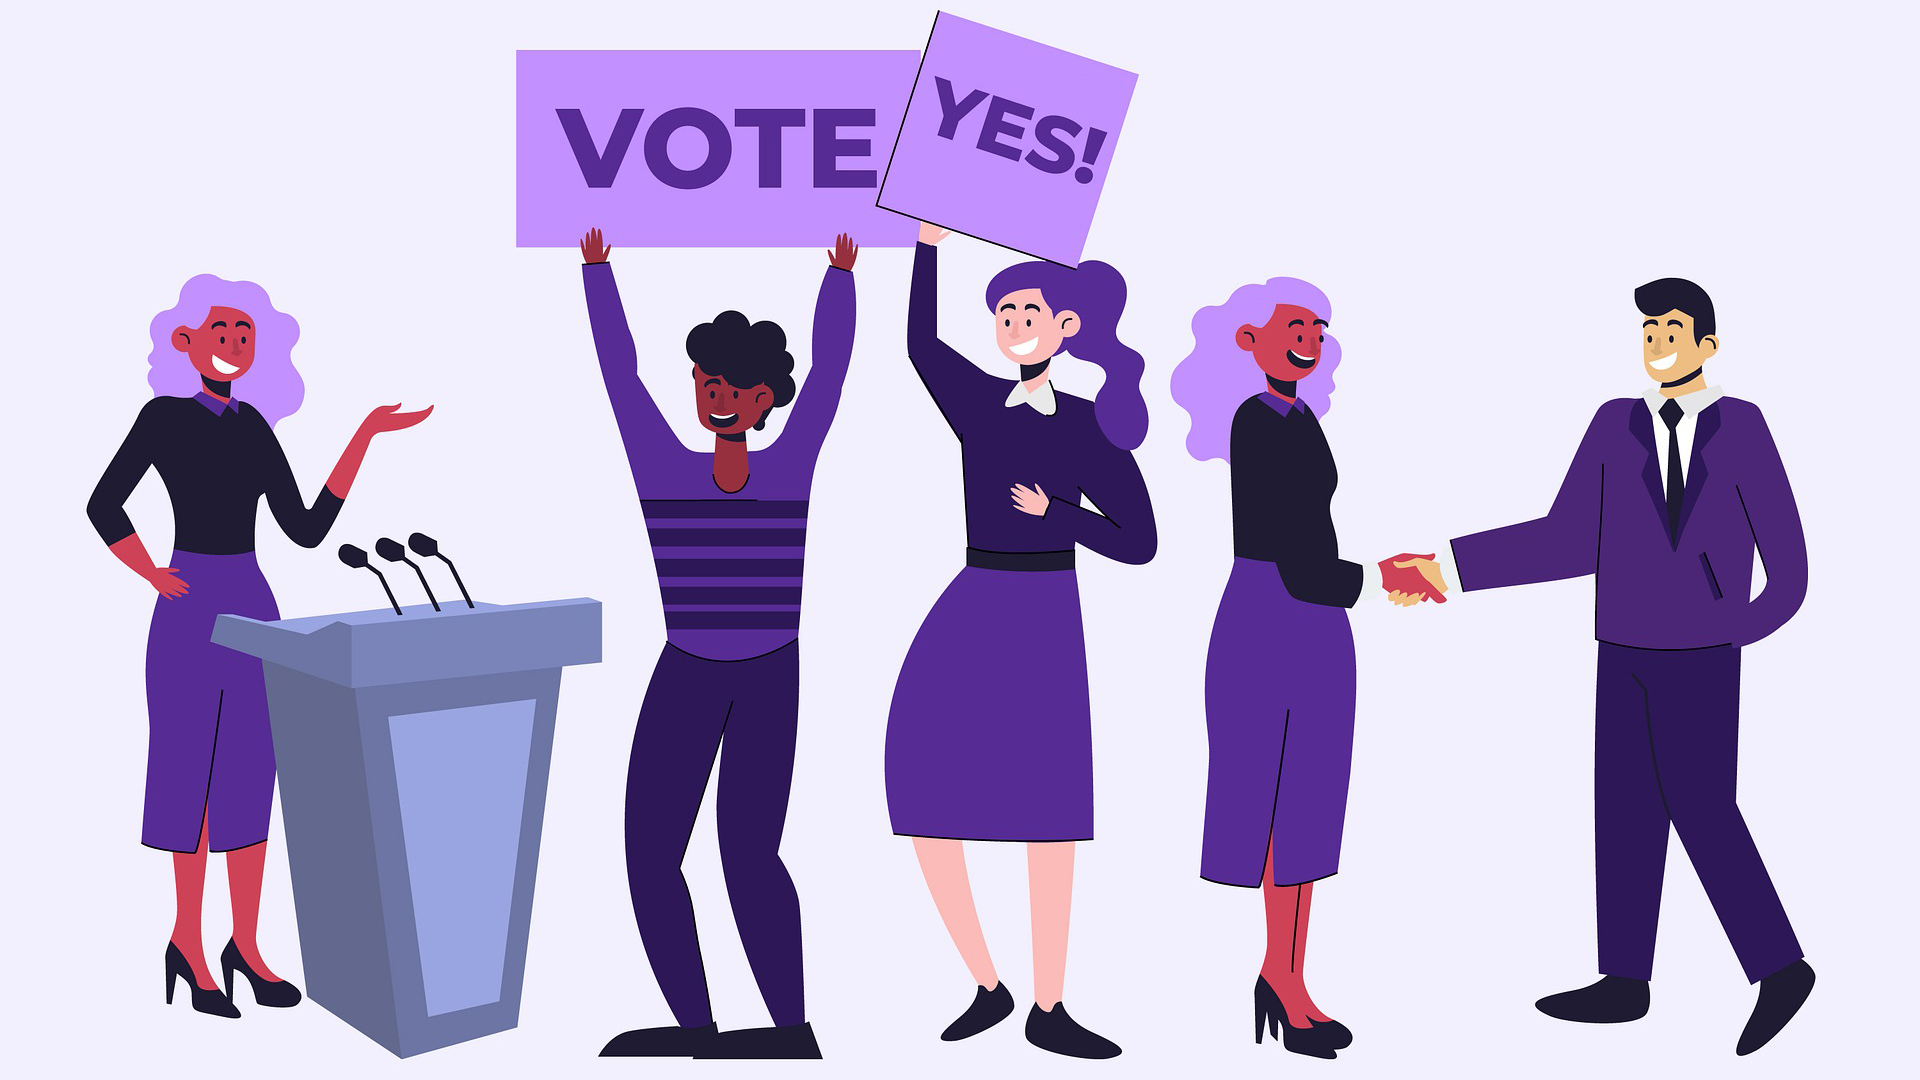 Graphic art of voting